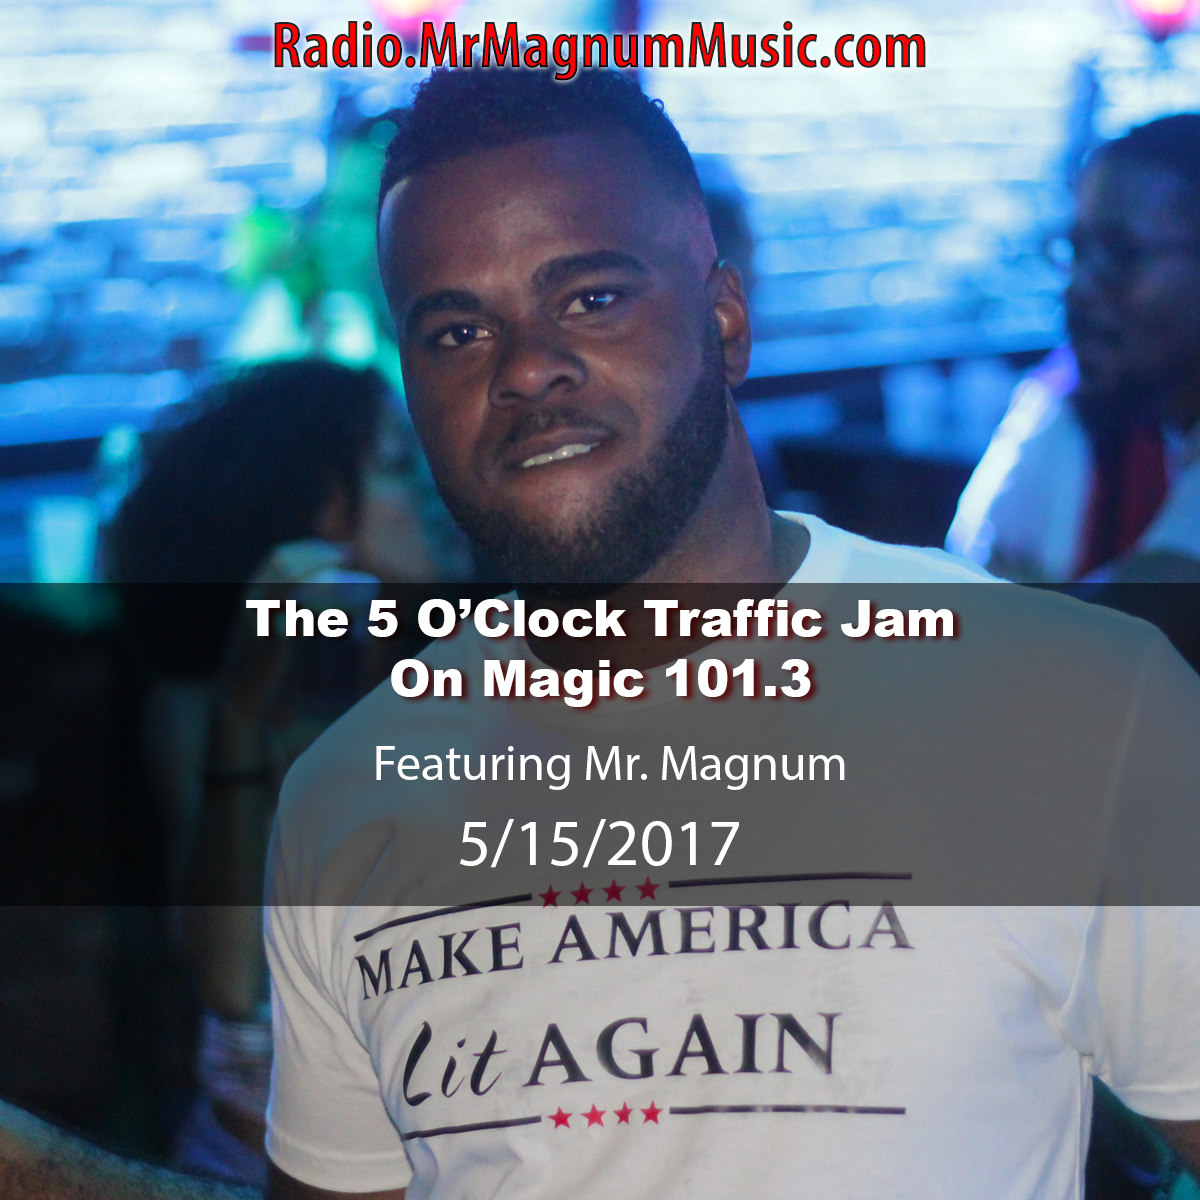 The 5 O'Clock Traffic Jam 20170515 featuring Gainesville's #1 DJ, Mr. Magnum on Magic 101.3